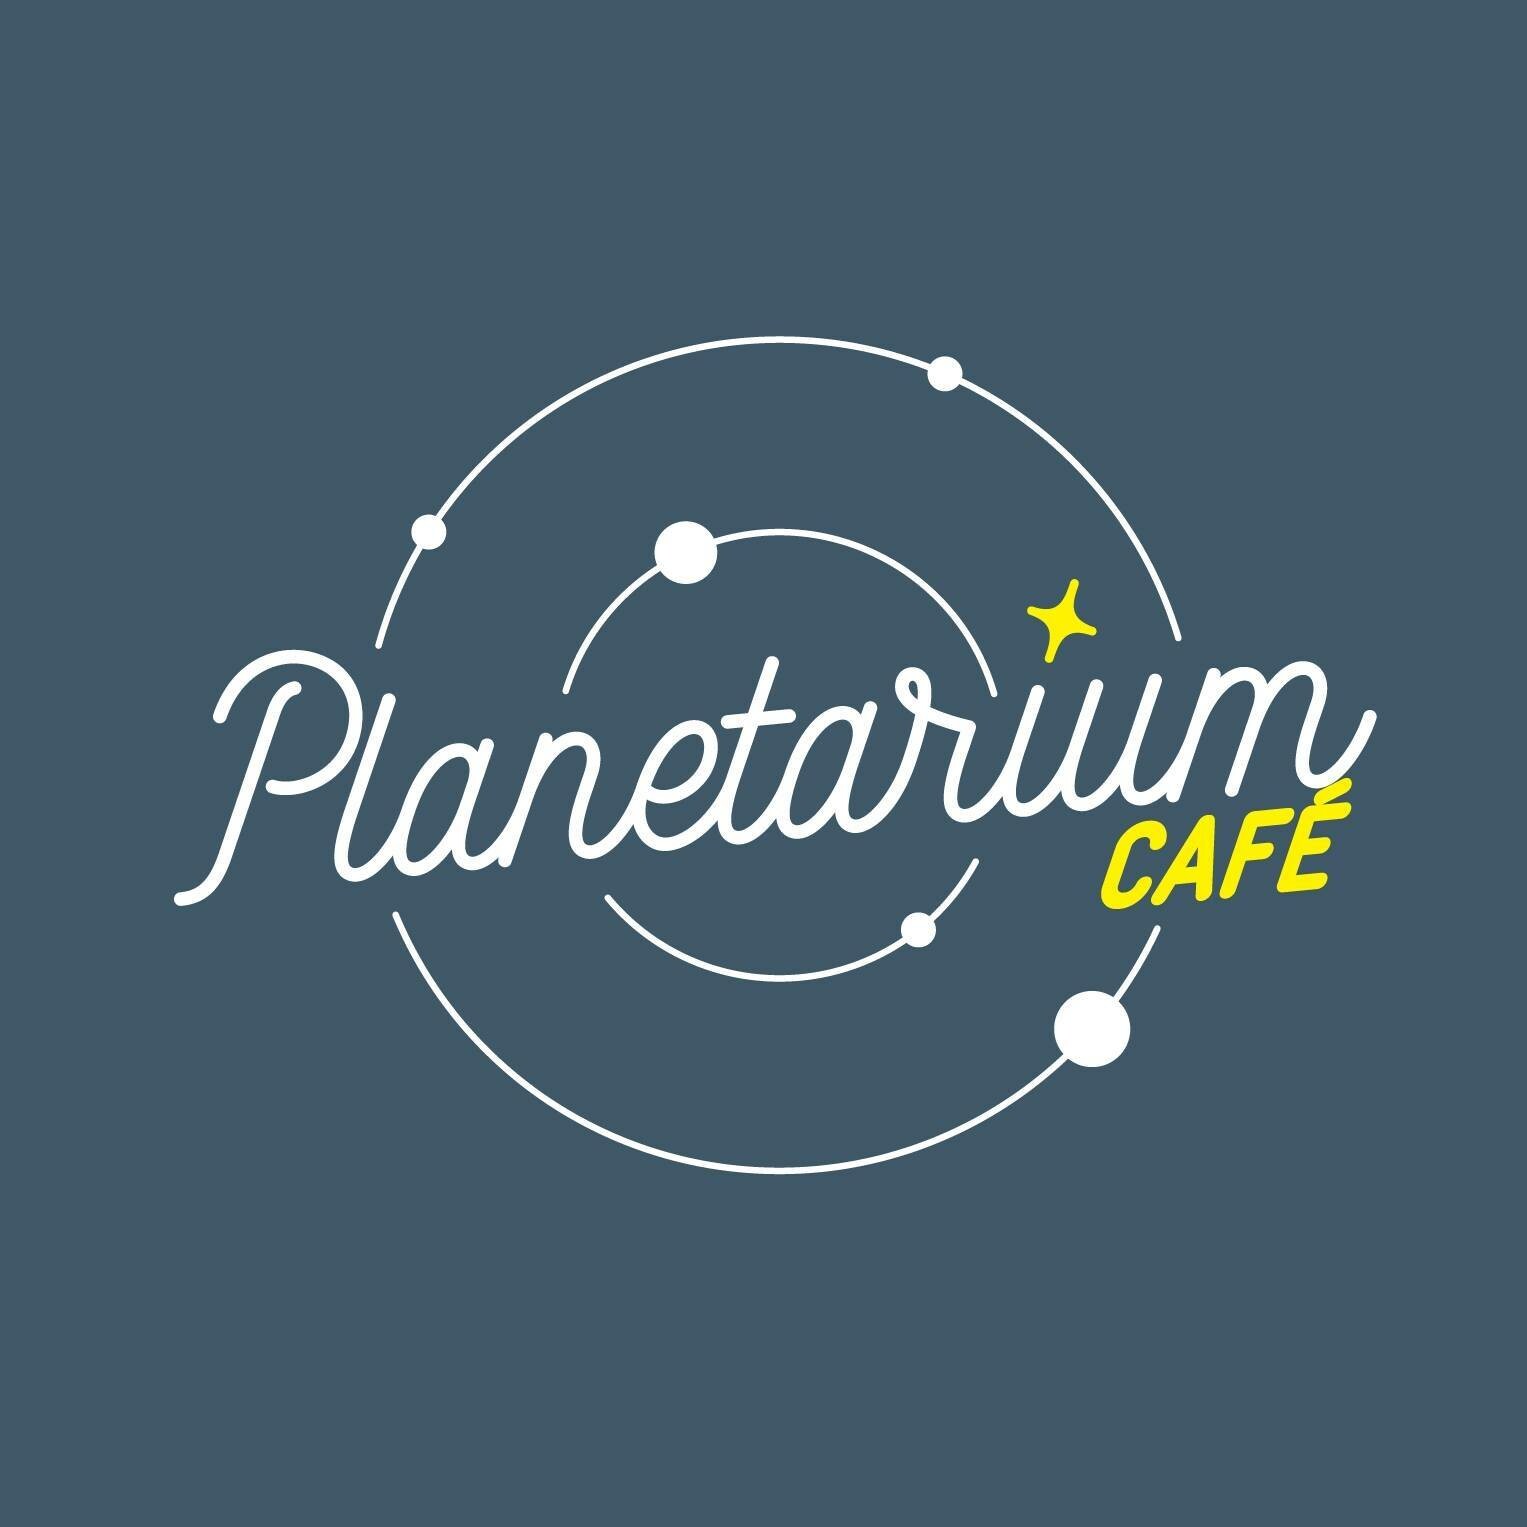 blue solar system logo with text planetarium cafe